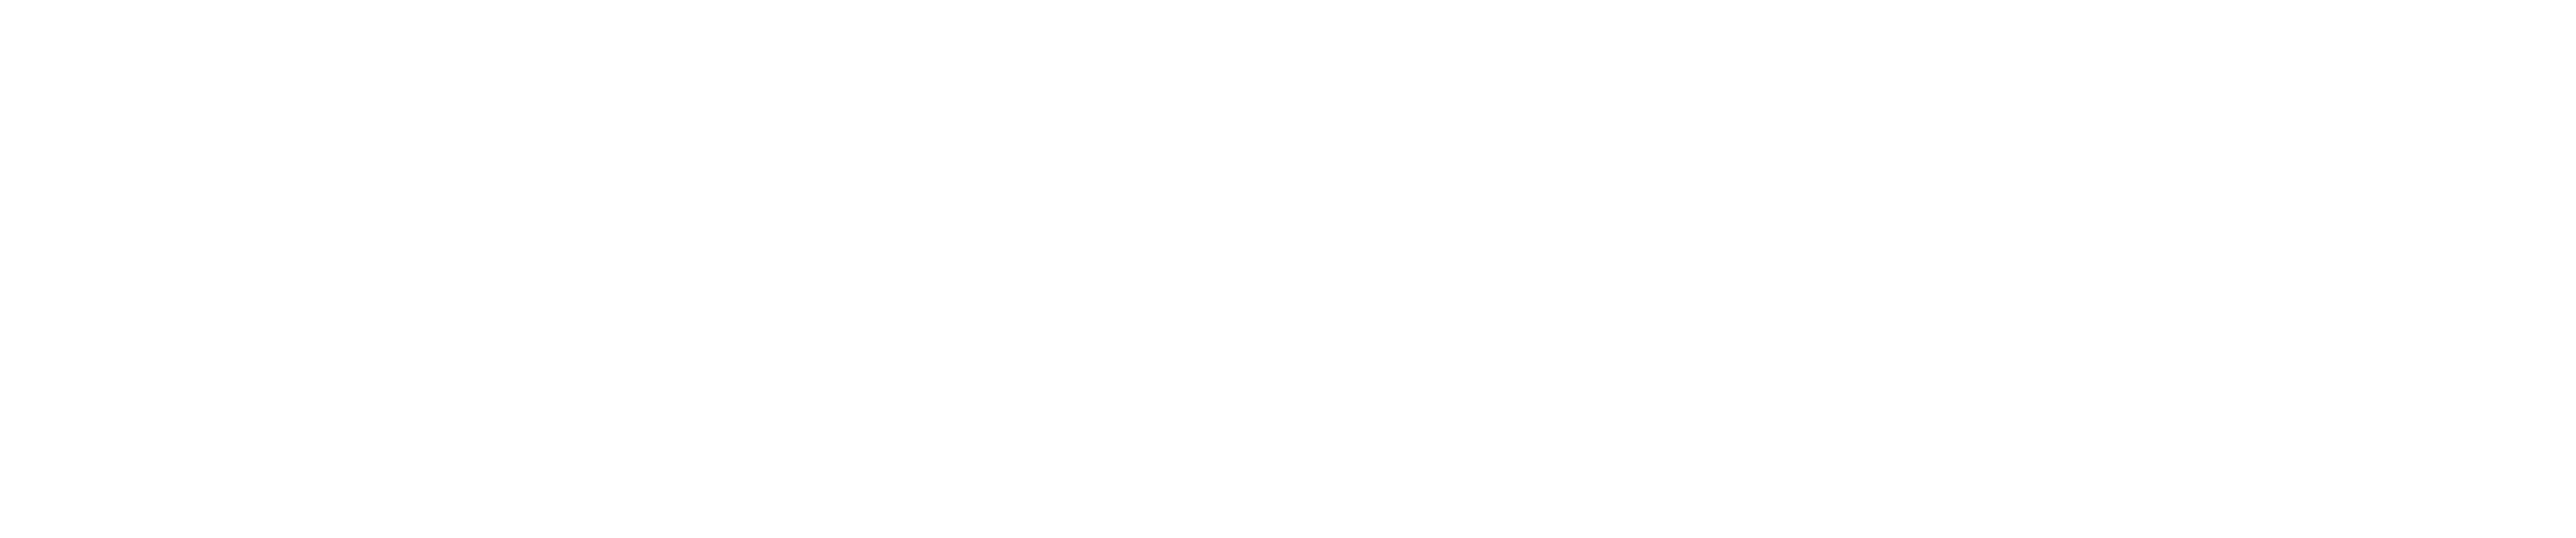 ymcg logo white